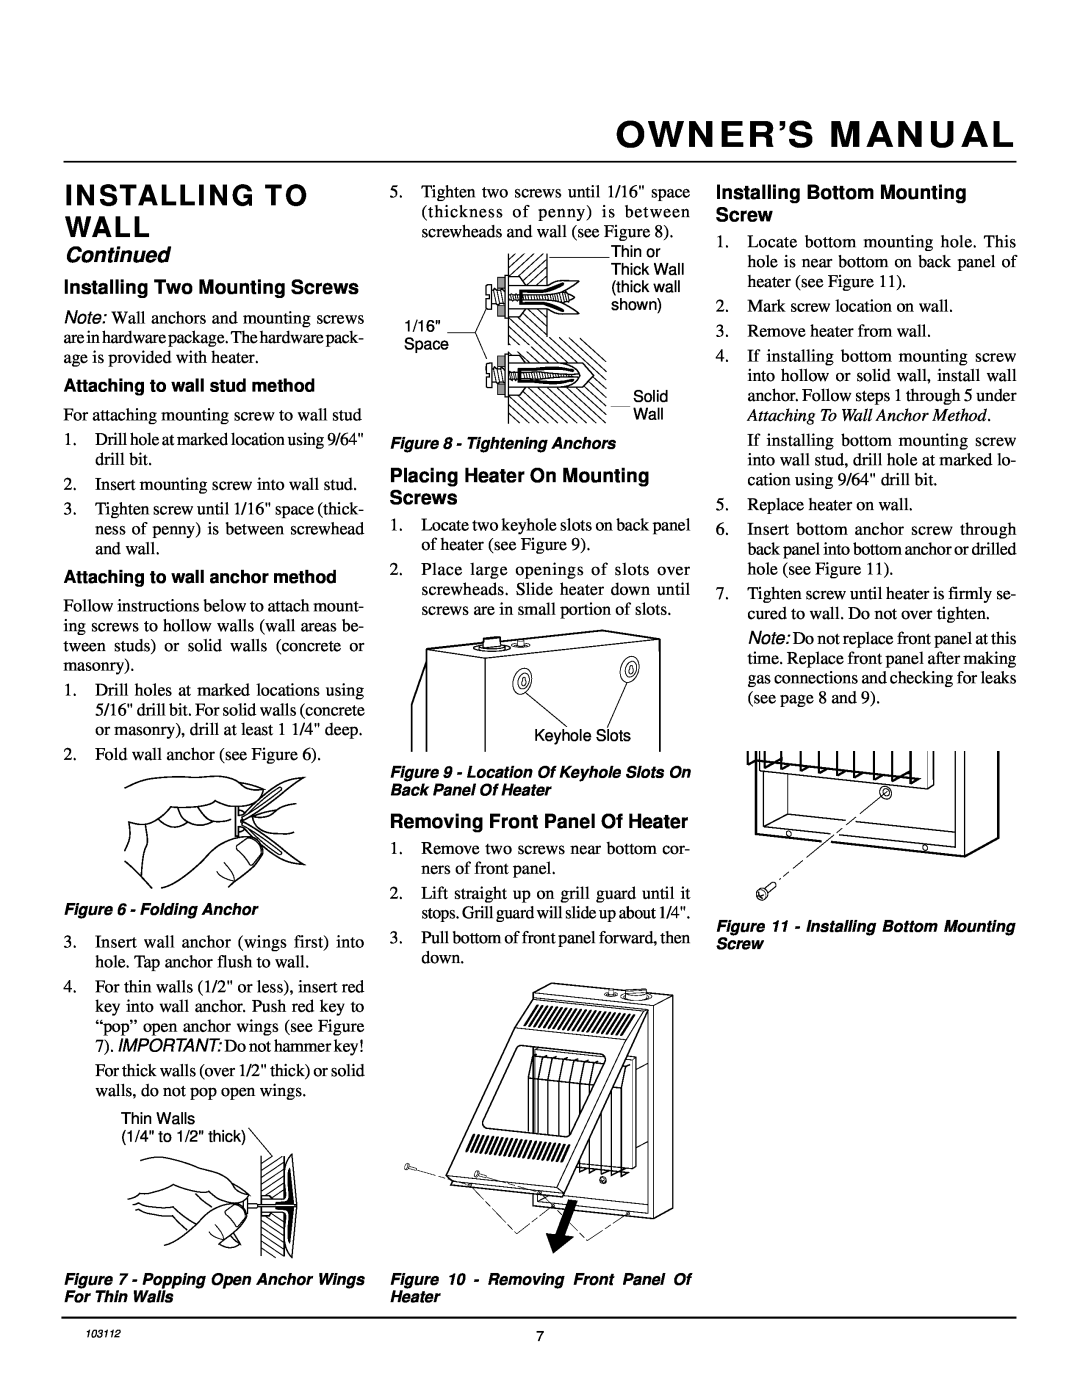 Desa 6000 BTU/HR Installing To Wall, Installing Two Mounting Screws, Placing Heater On Mounting Screws, Owner’S Manual 